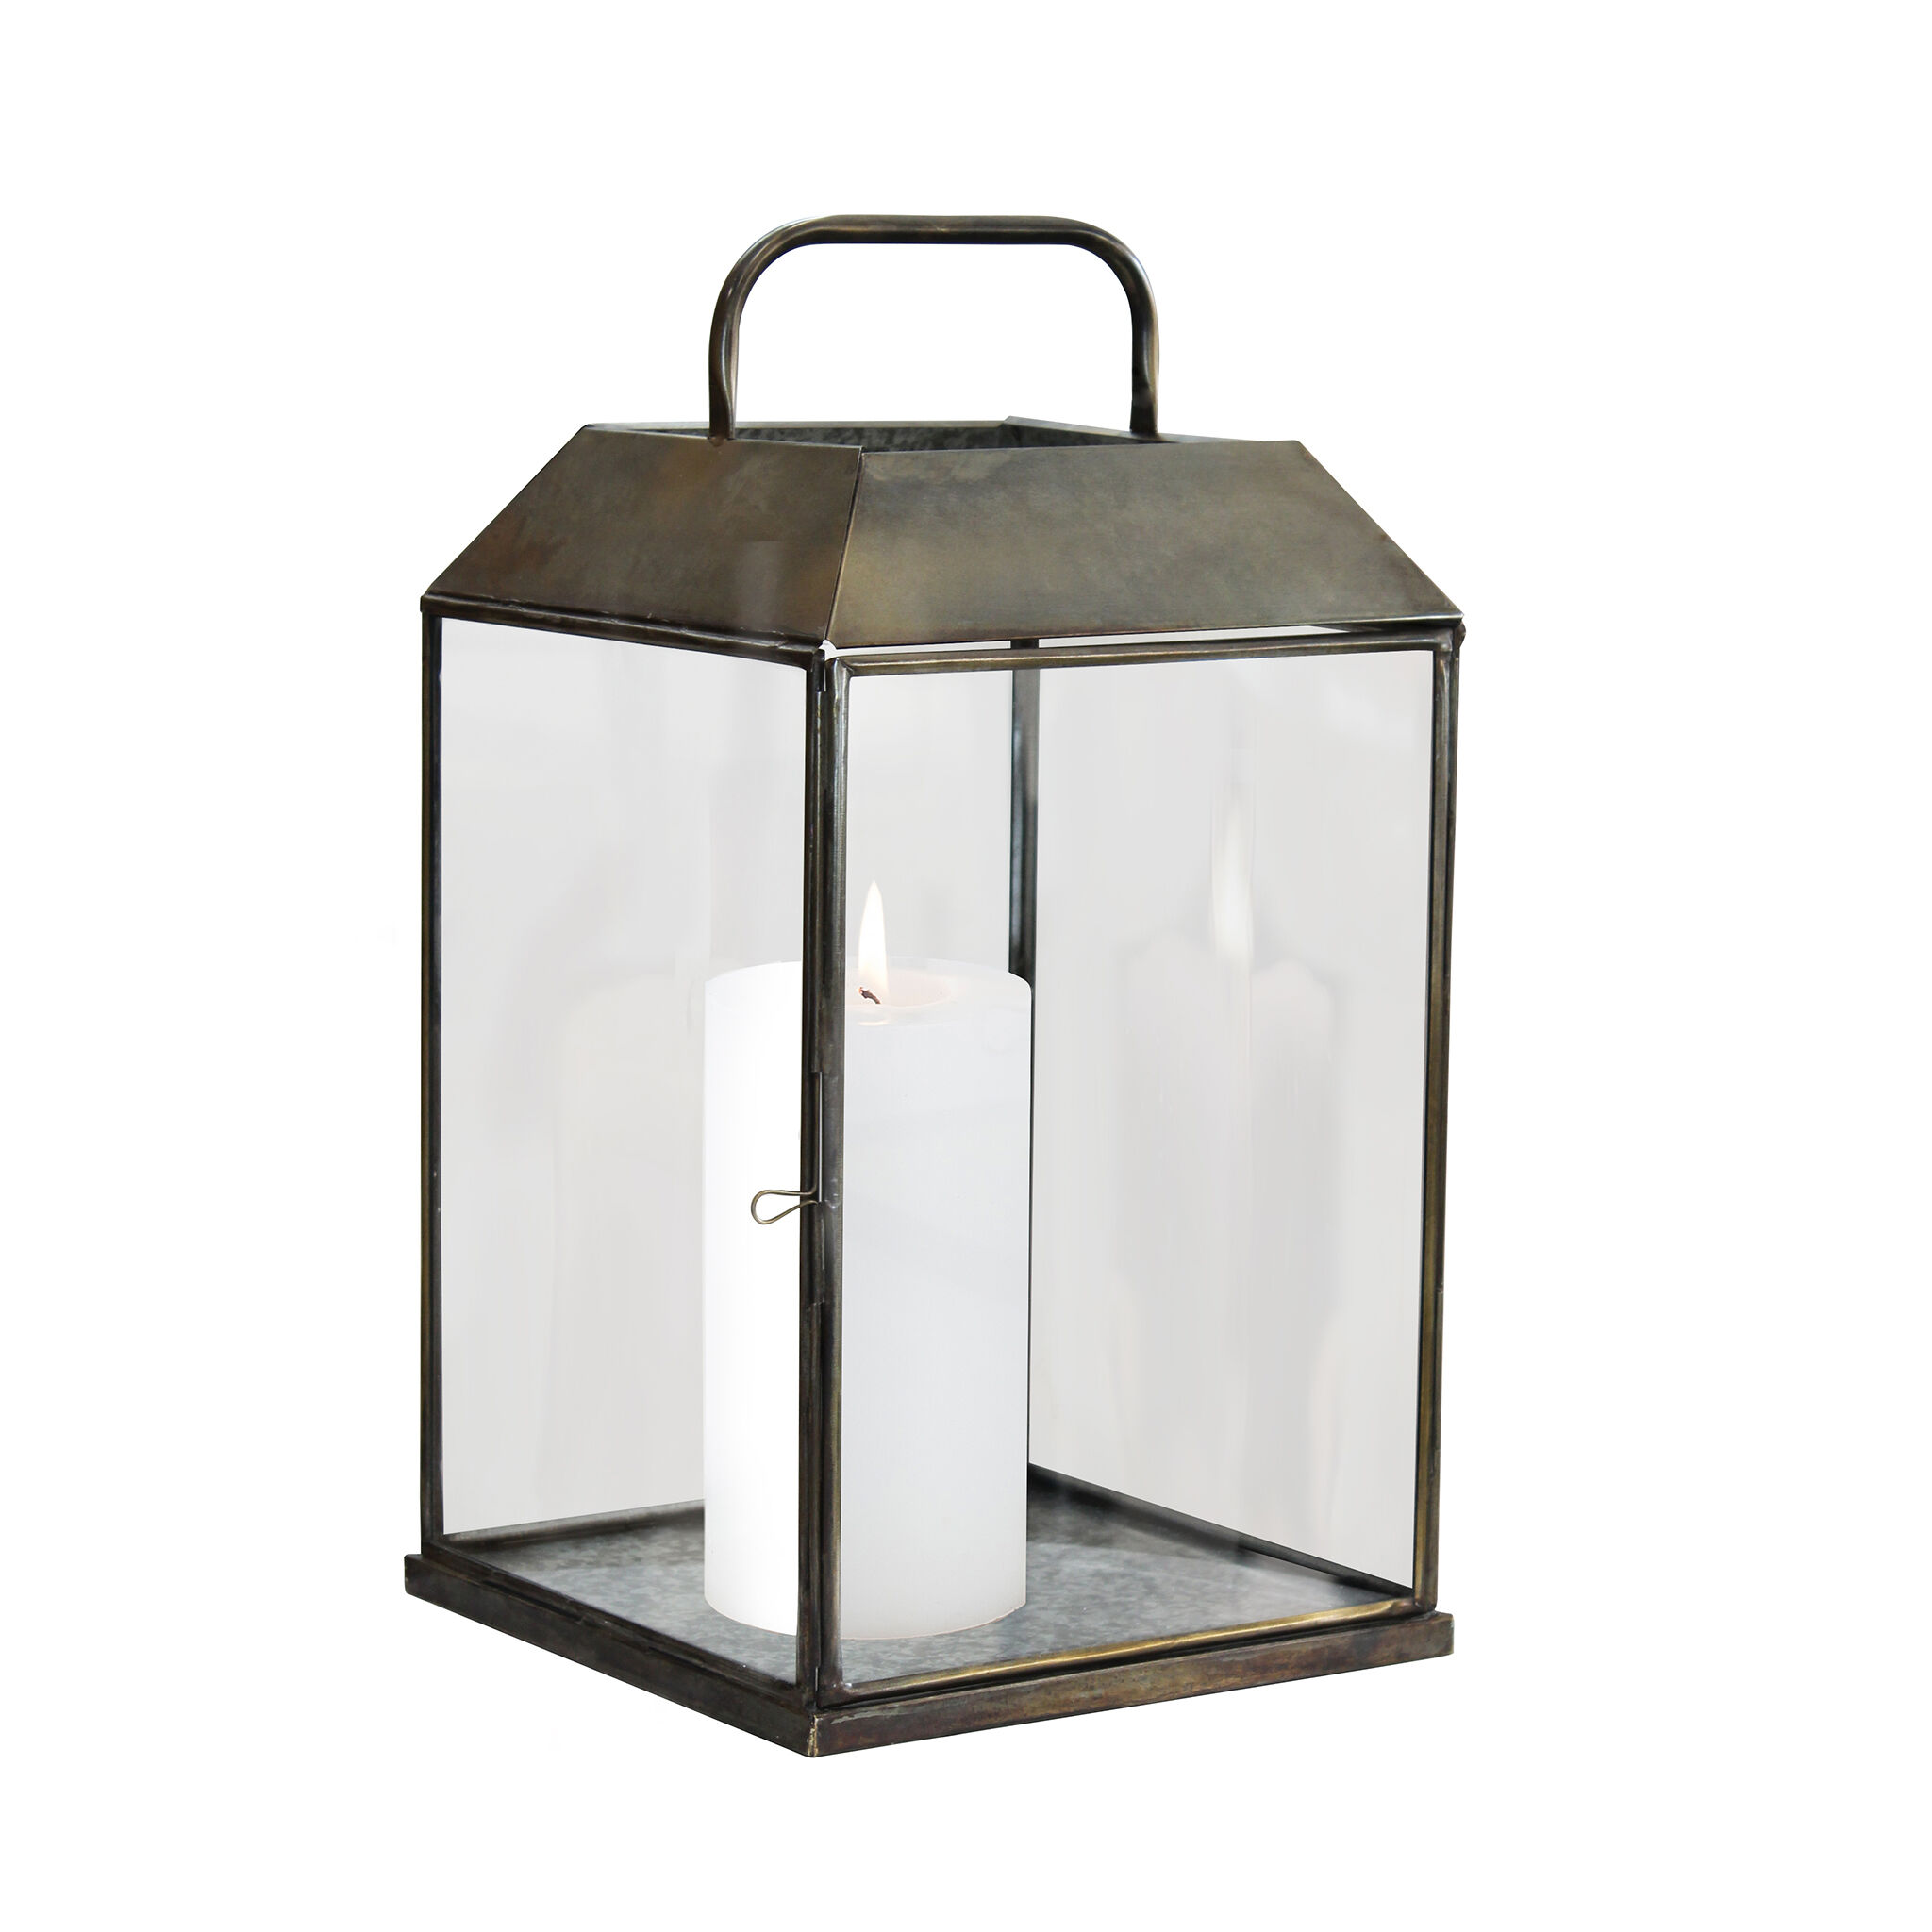 Milani Home lanterna in vetro di design moderno per giardino cm 25 x 25 x 46 h Bronzo 25 x 46 x 25 cm